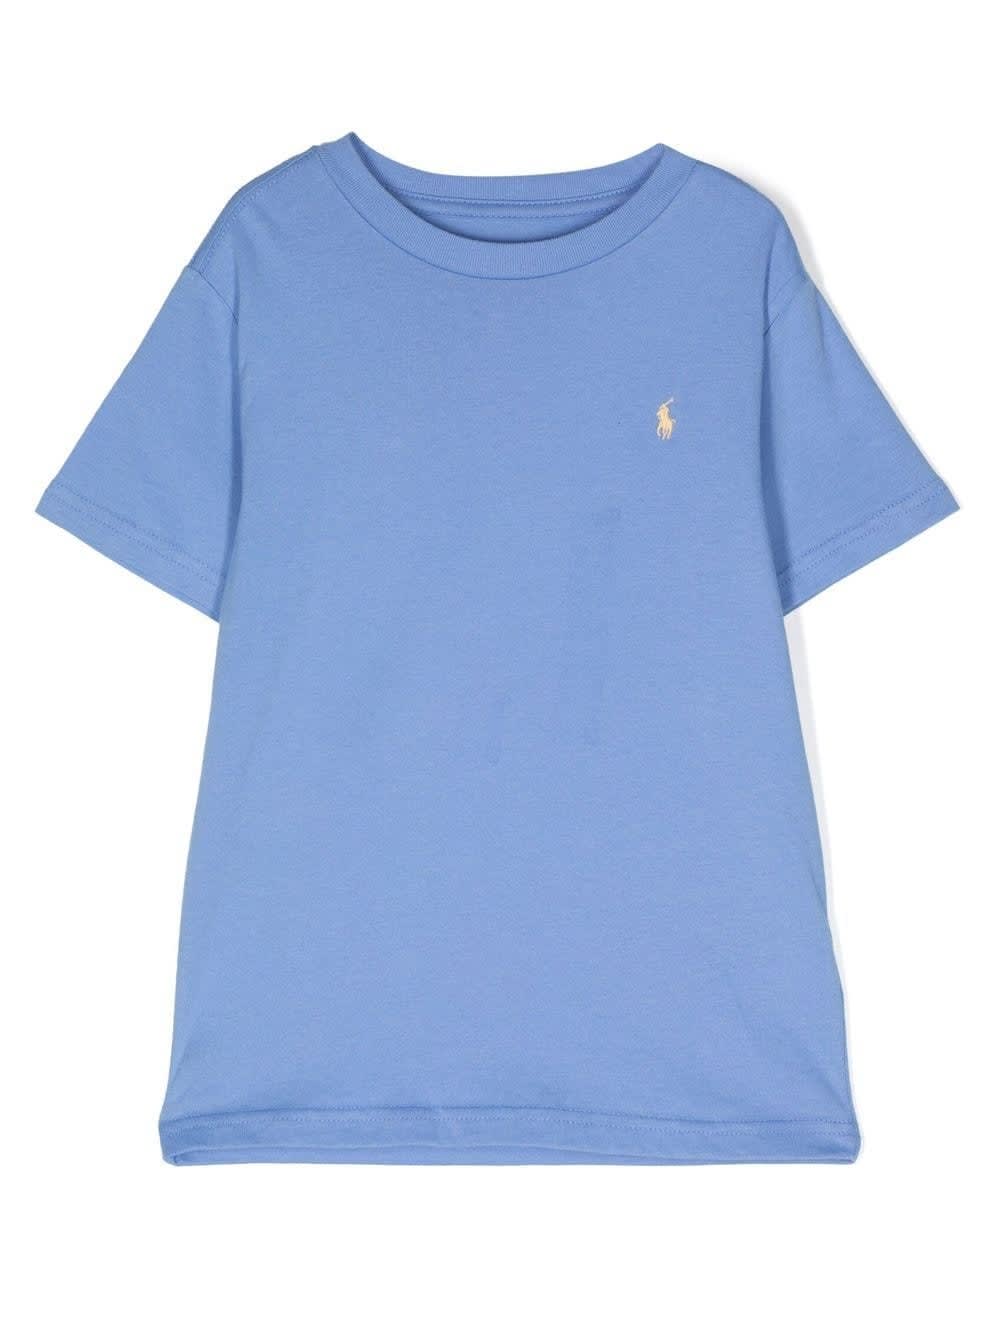 Ralph Lauren Light Blue T-shirt With Yellow Pony